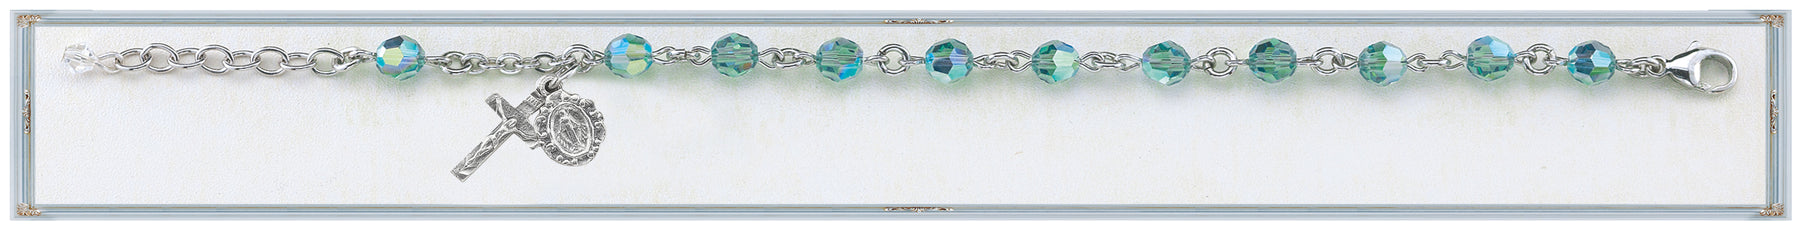 6mm Erinite Swarovksi Crystal Rosary Bracelet